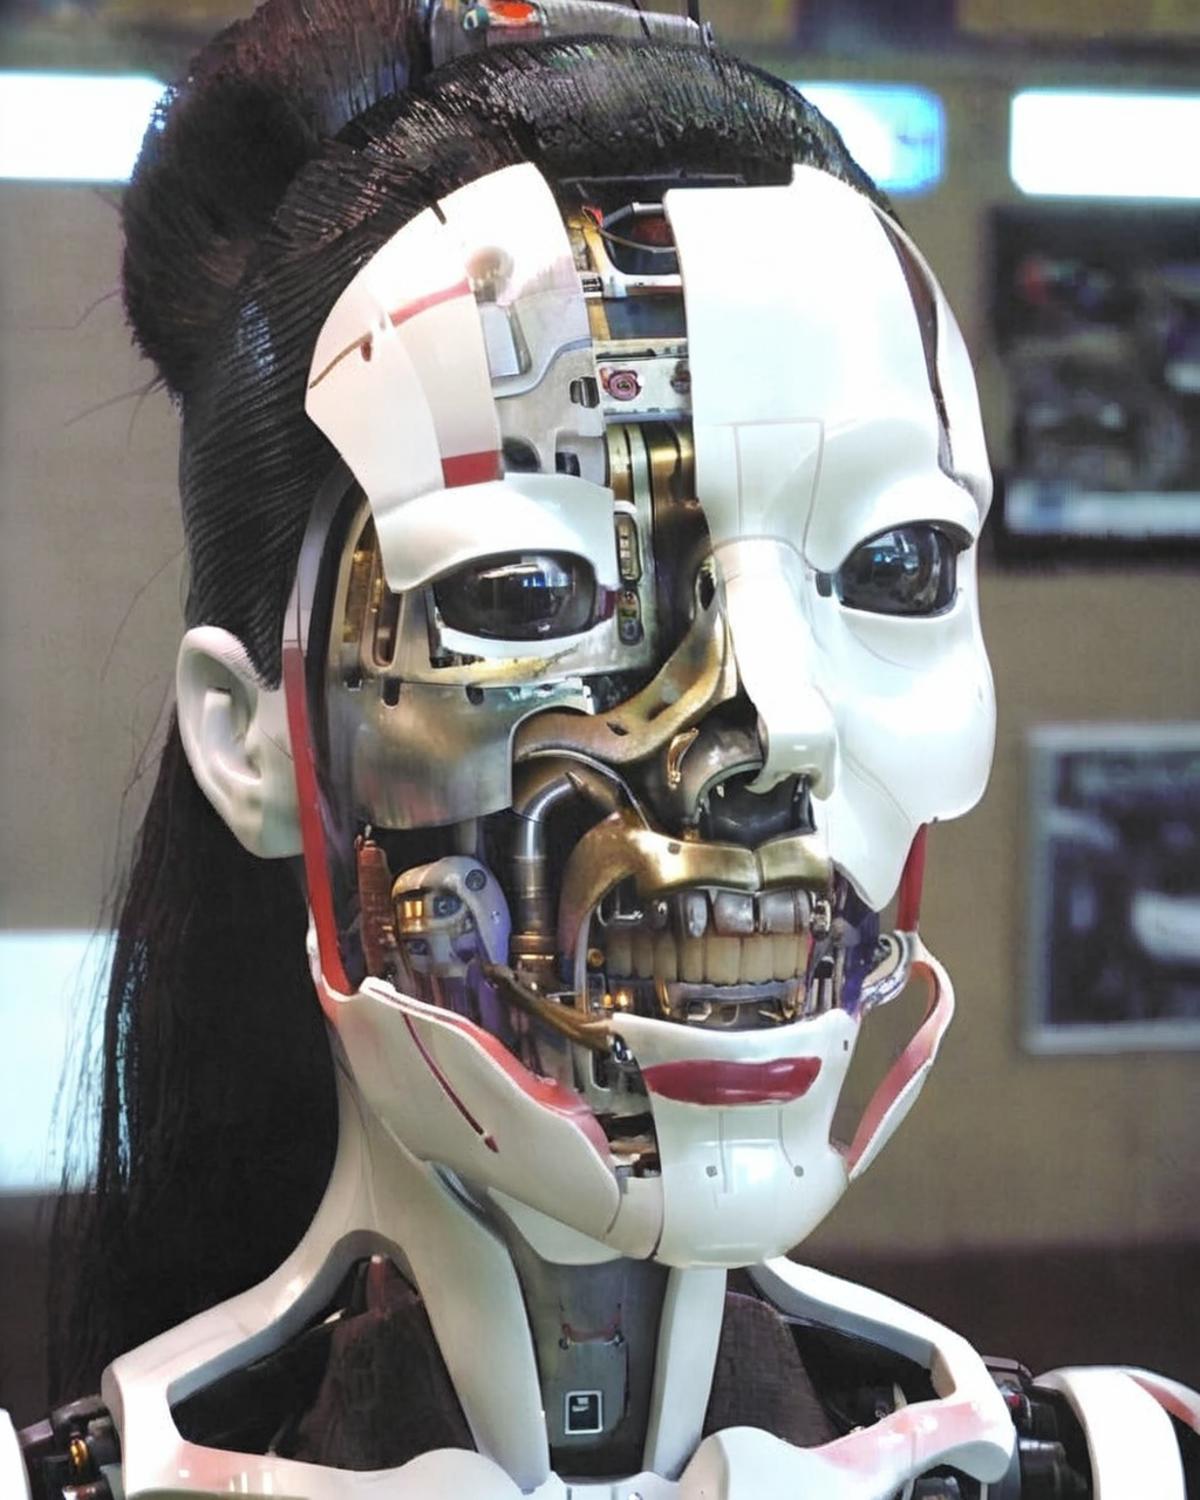 Face Robotics image by Ciro_Negrogni